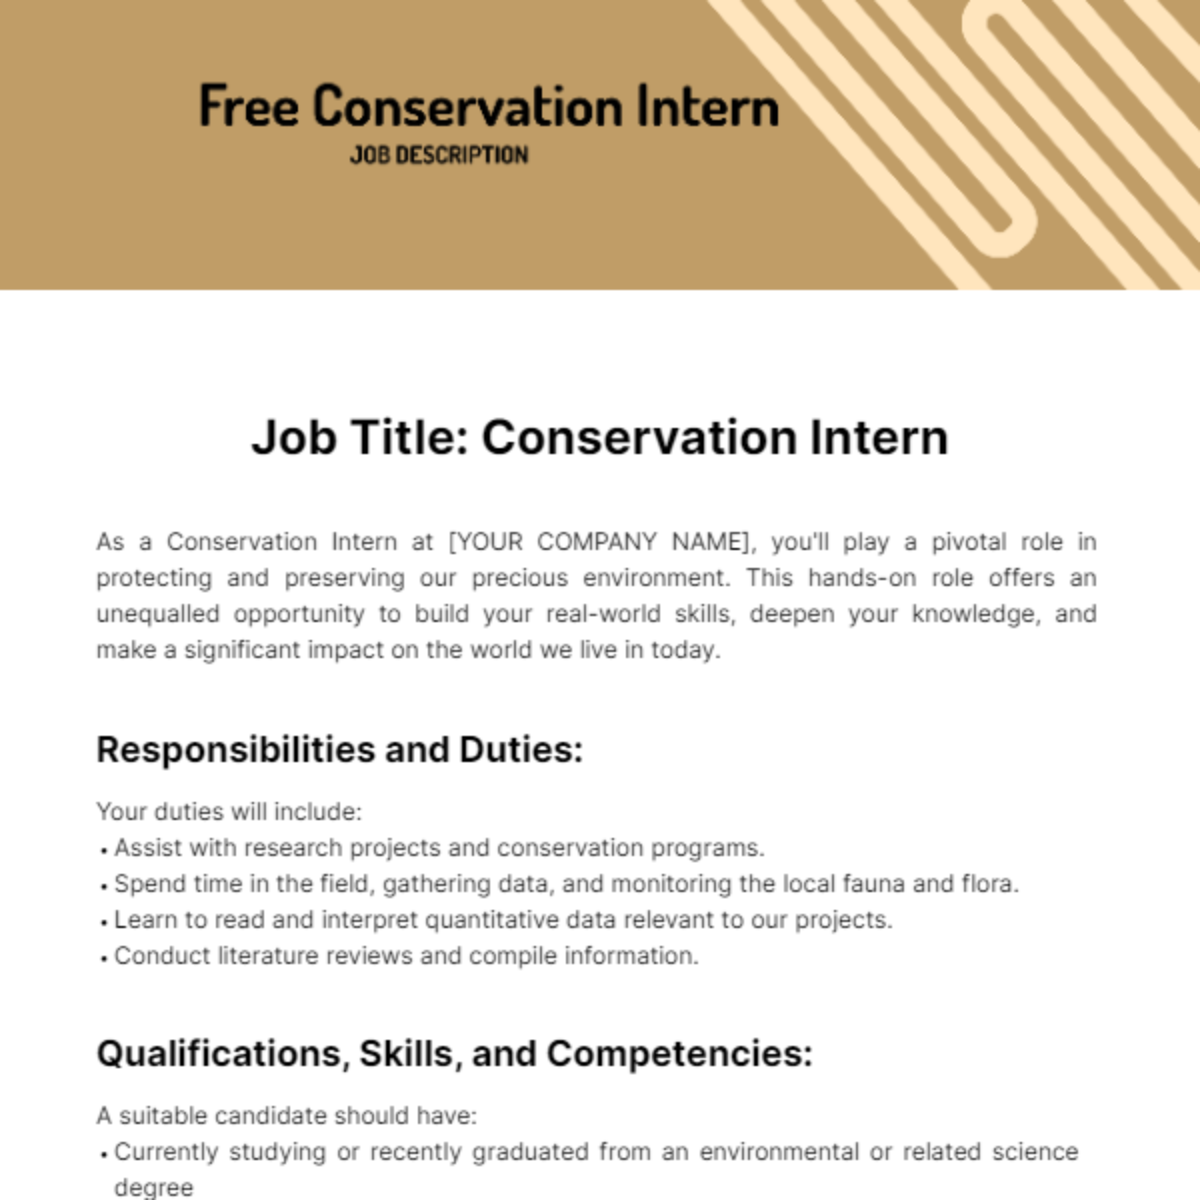 Free Conservation Intern Job Description Template